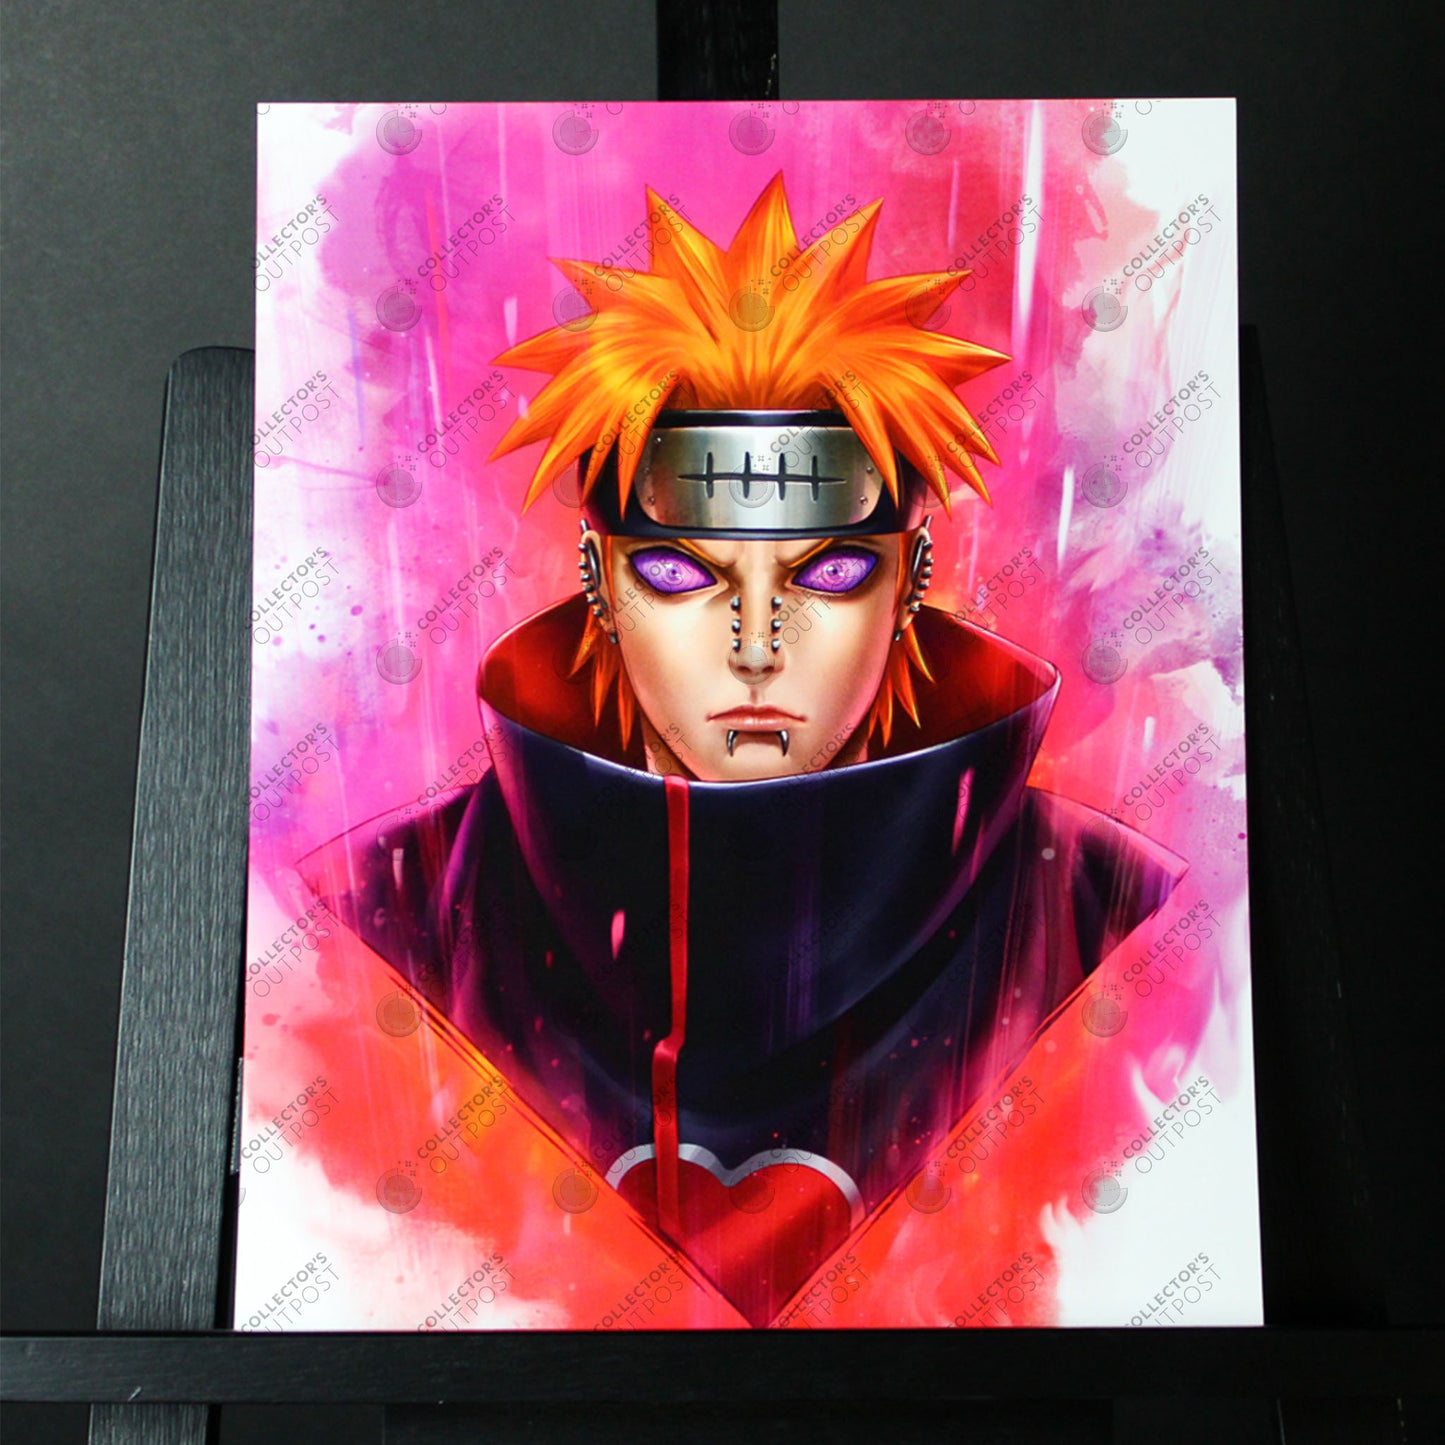 Naruto Eyes (Anime eyes) Canvas Art Print